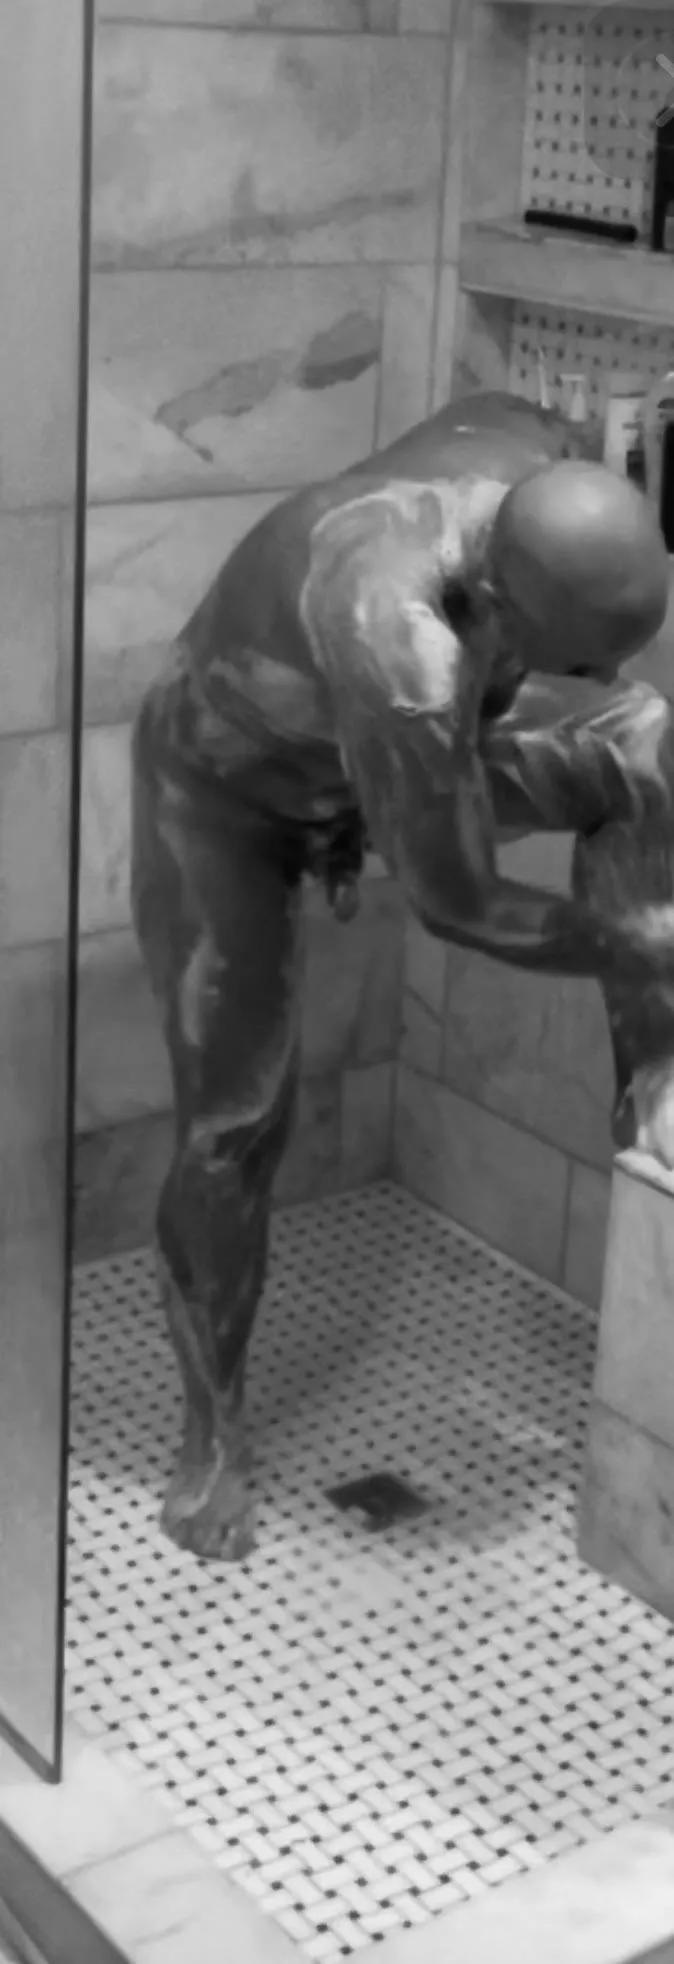 Squeaky Clean Nudes Menshowering Nude Pics Org